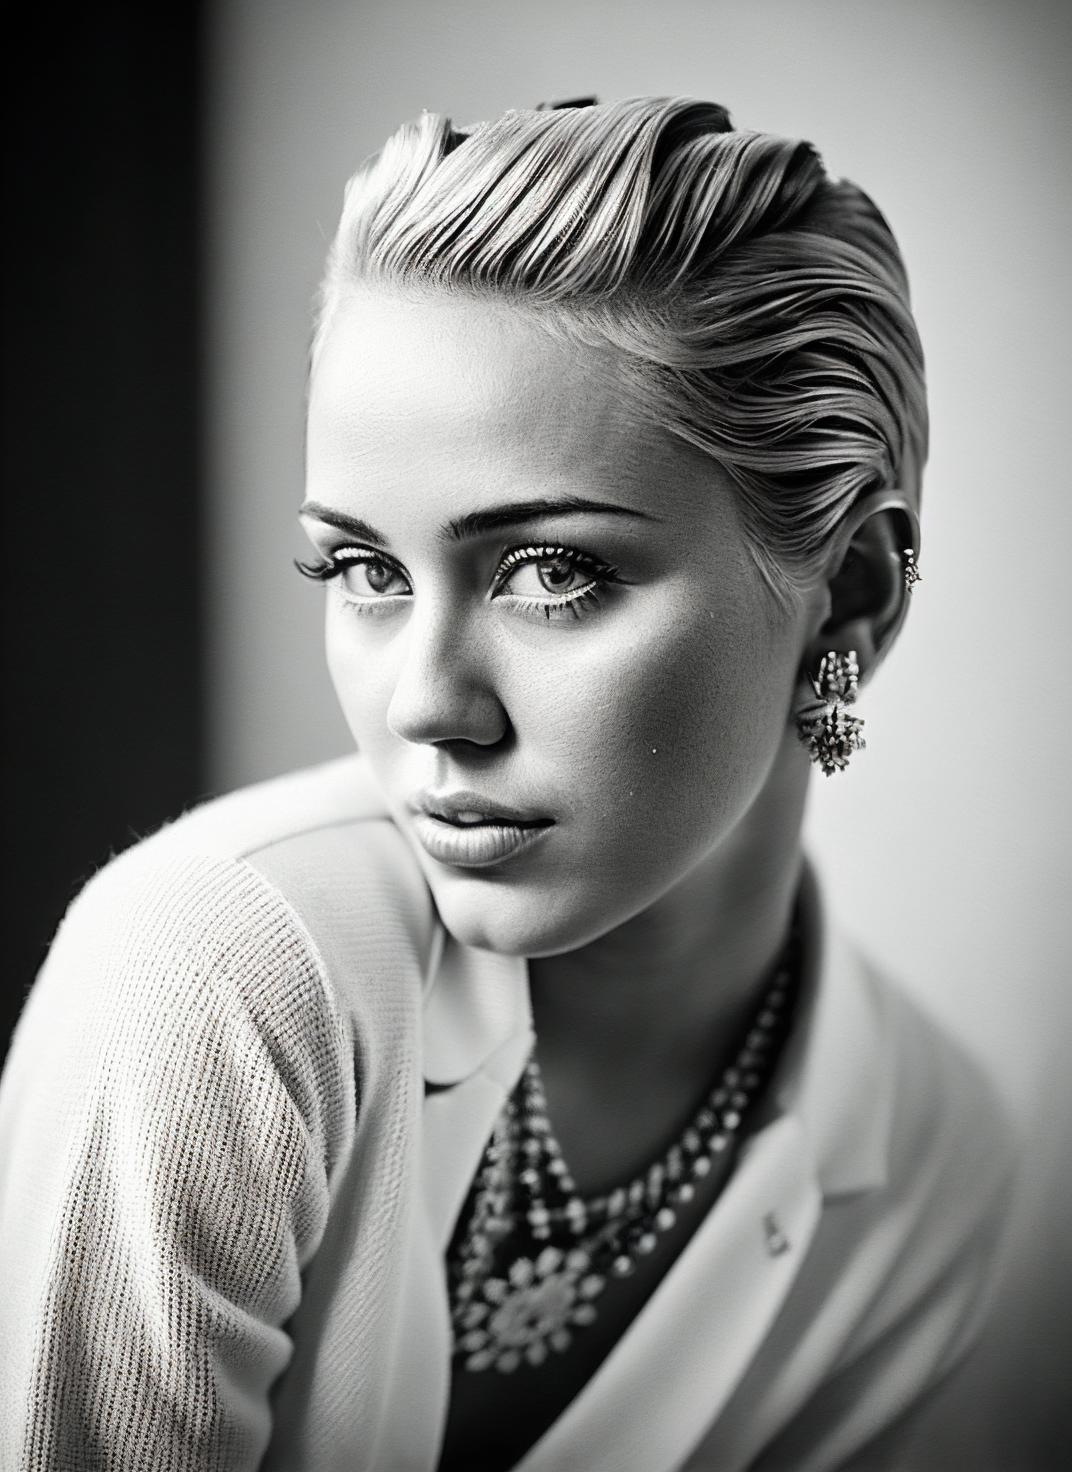 Miley Cyrus image by malcolmrey